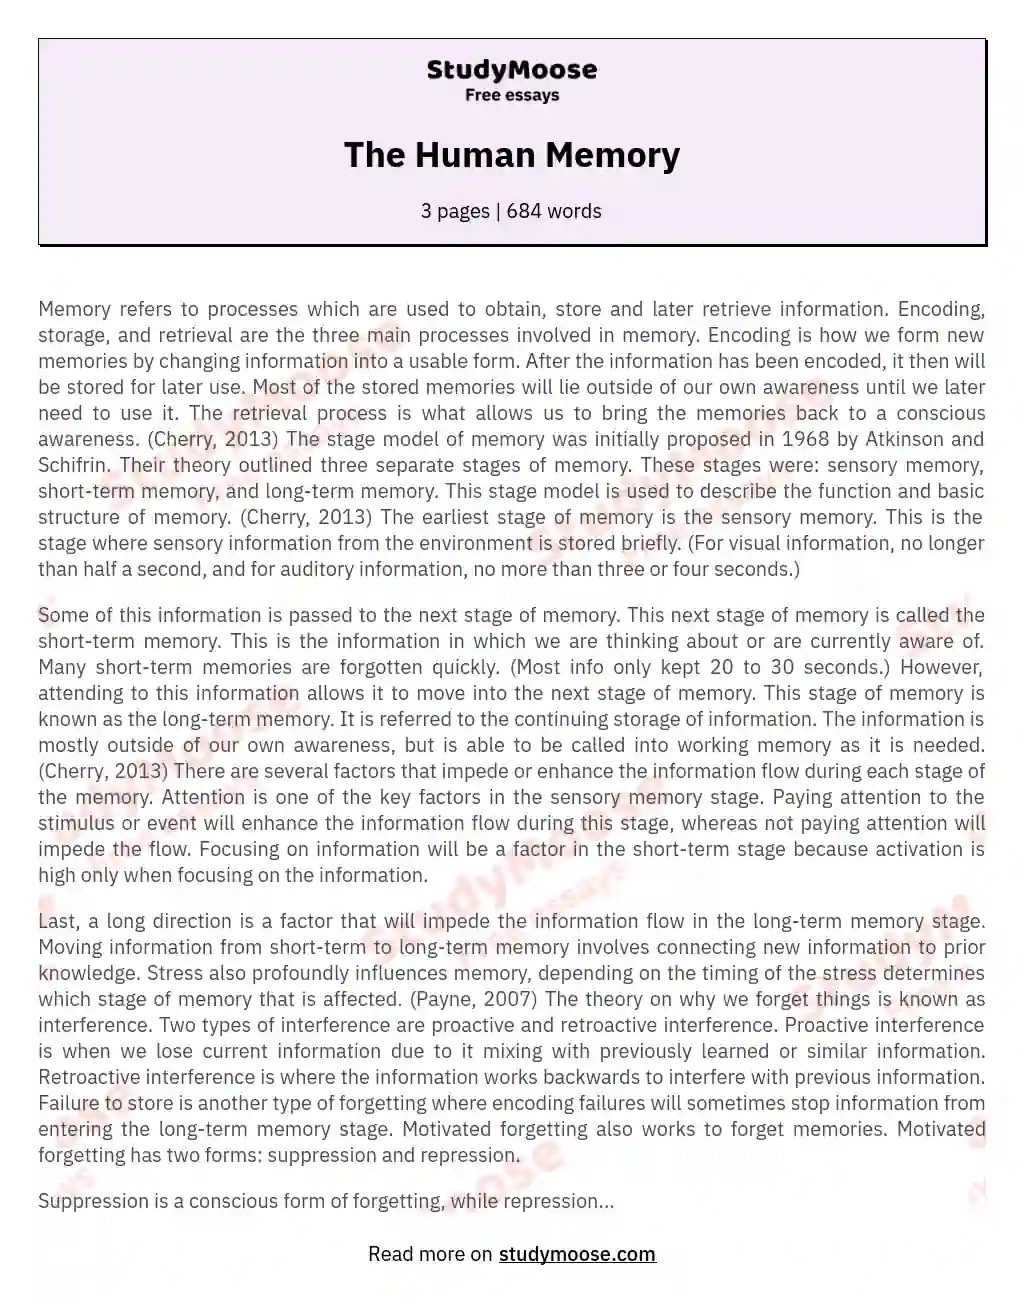 The Human Memory